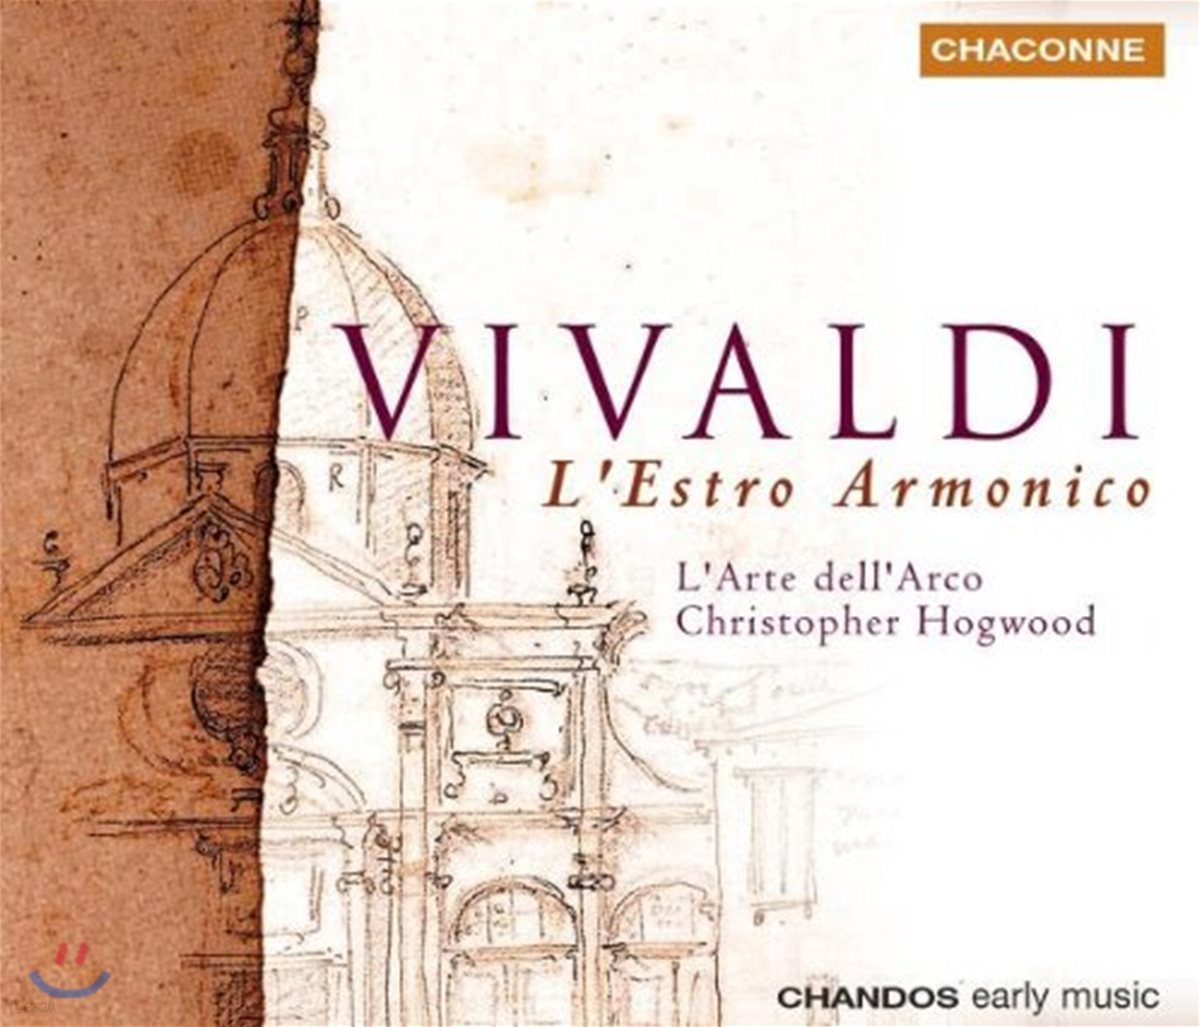 Christopher Hogwood 비발디: 조화의 영감 - 라르테 델라르코, 크리스토퍼 호그우드 (Vivaldi: L'Estro Armonico)